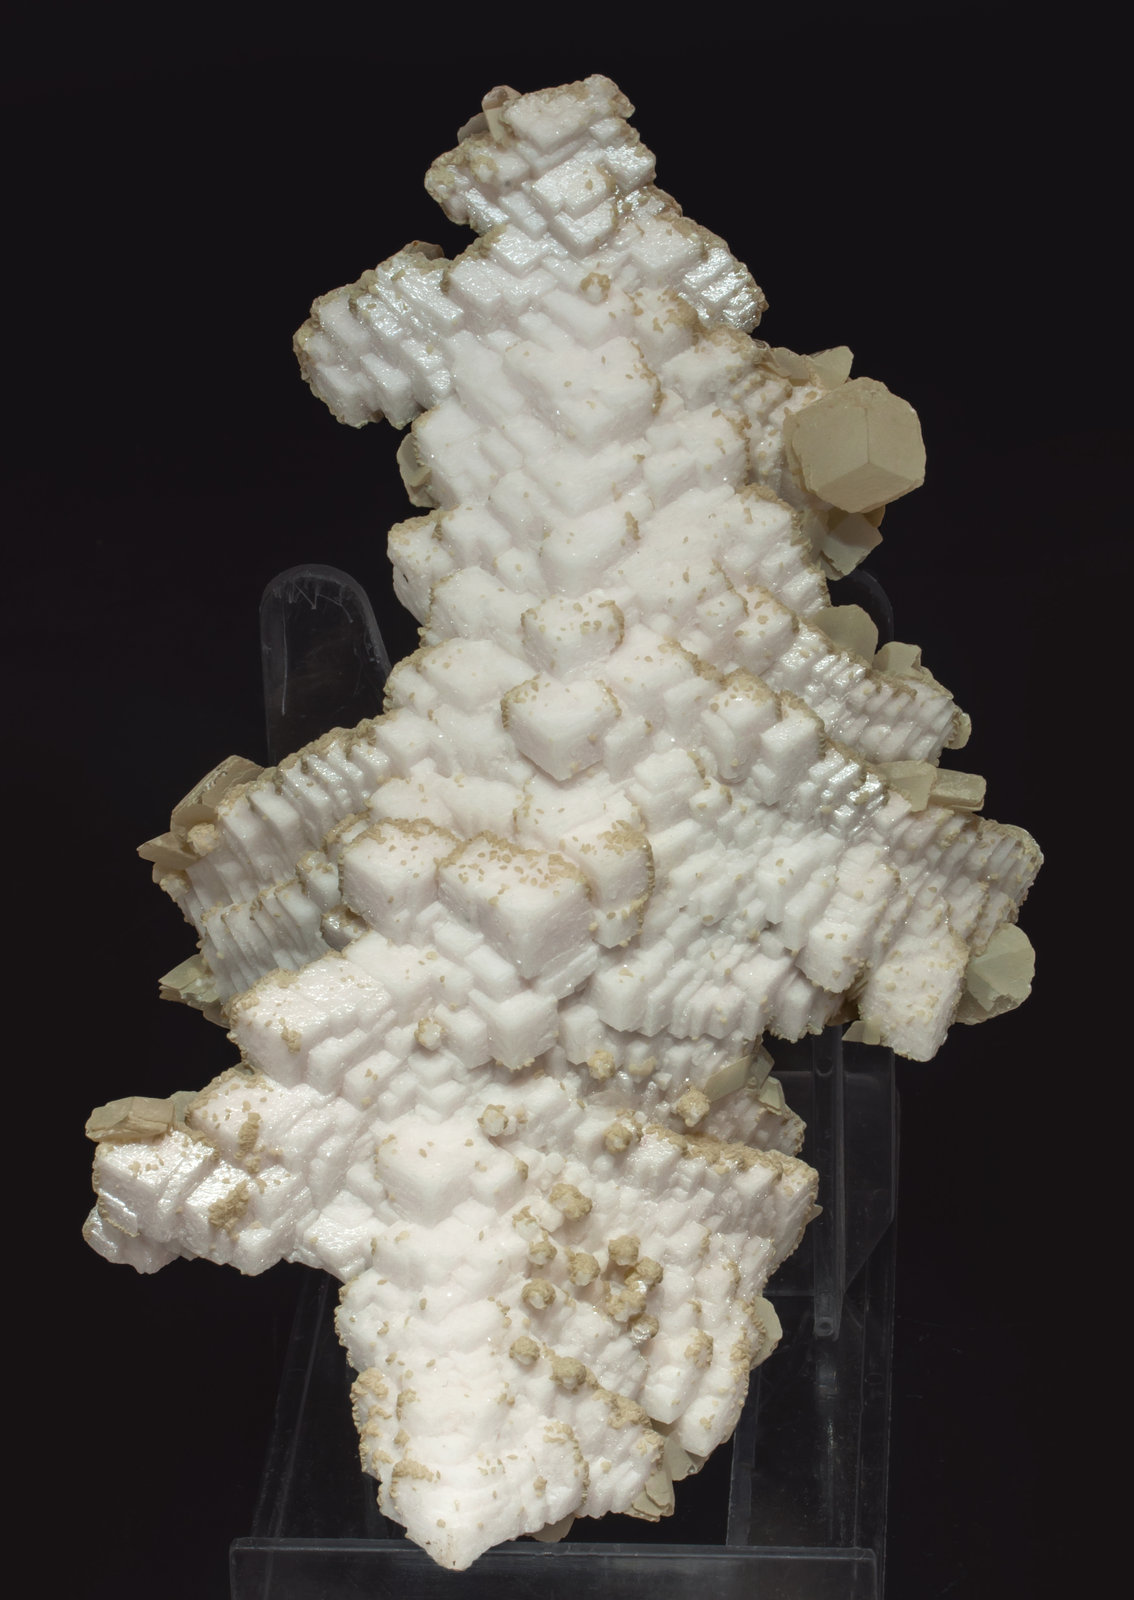 specimens/s_imagesAL4/Dolomite-EE87AL4f.jpg